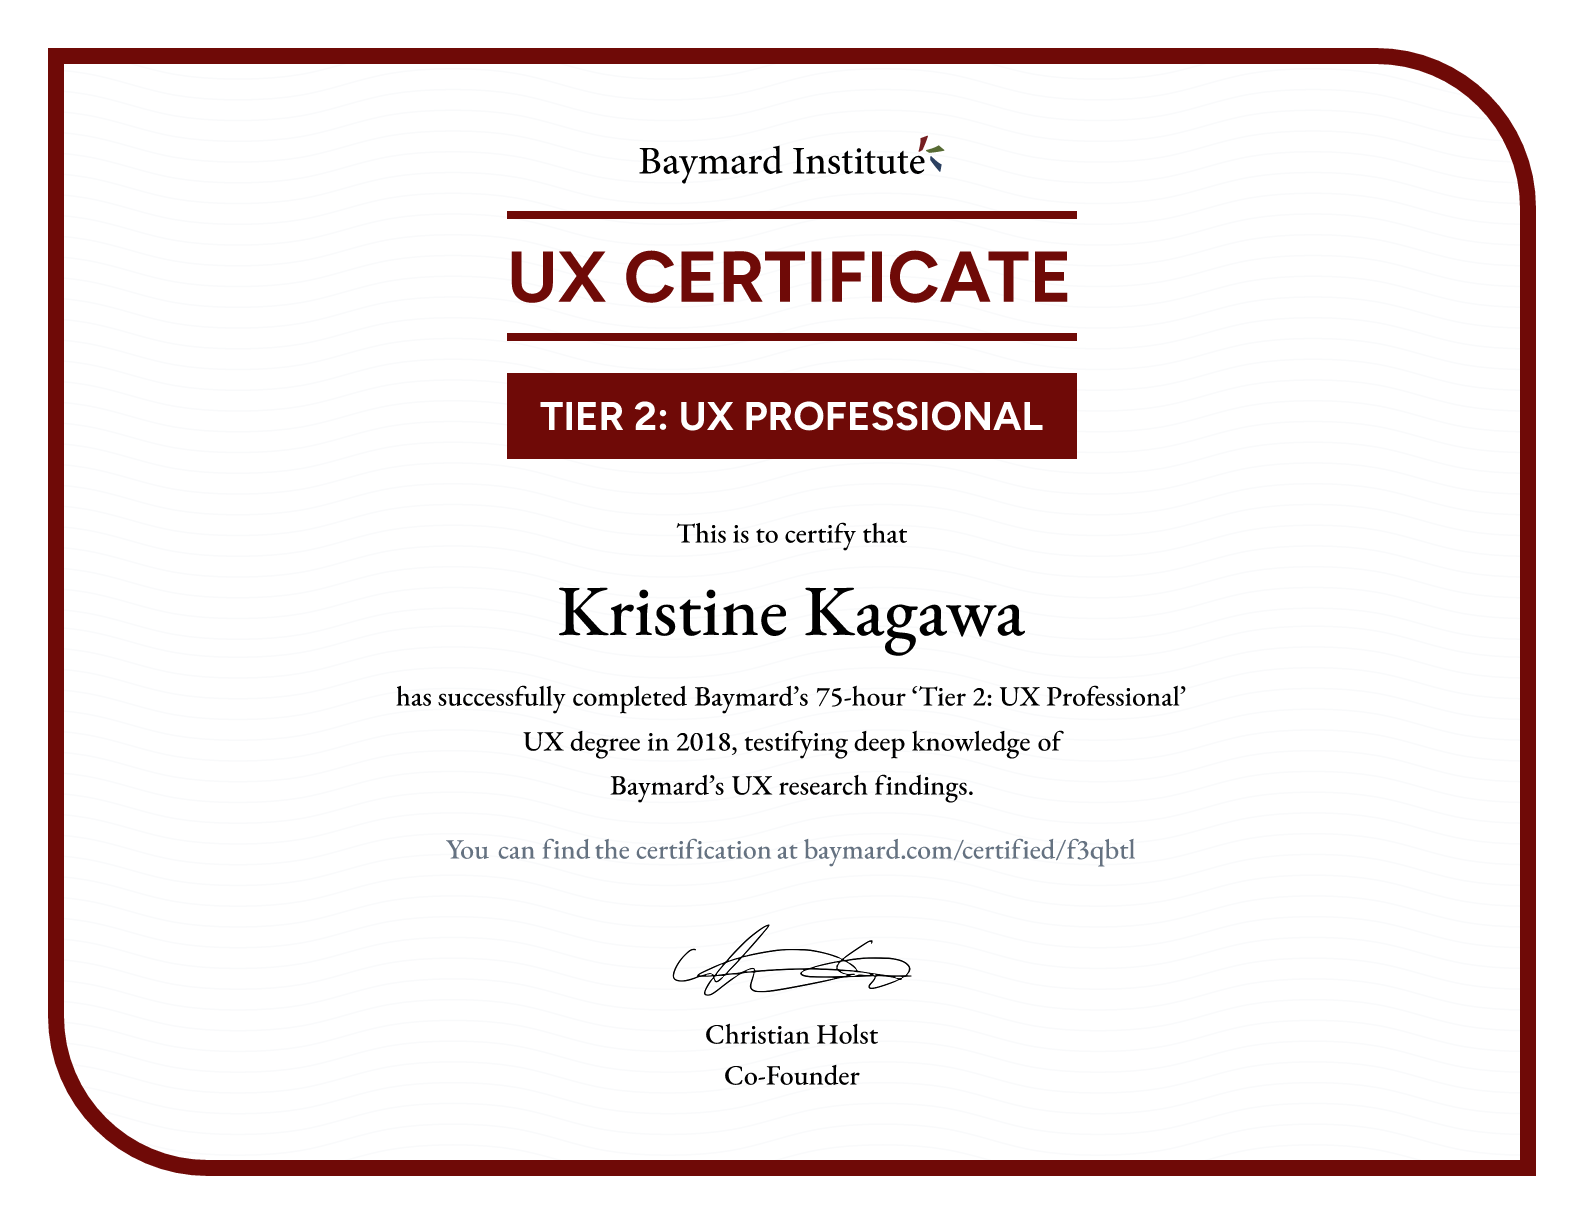 Kristine Kagawa’s certificate